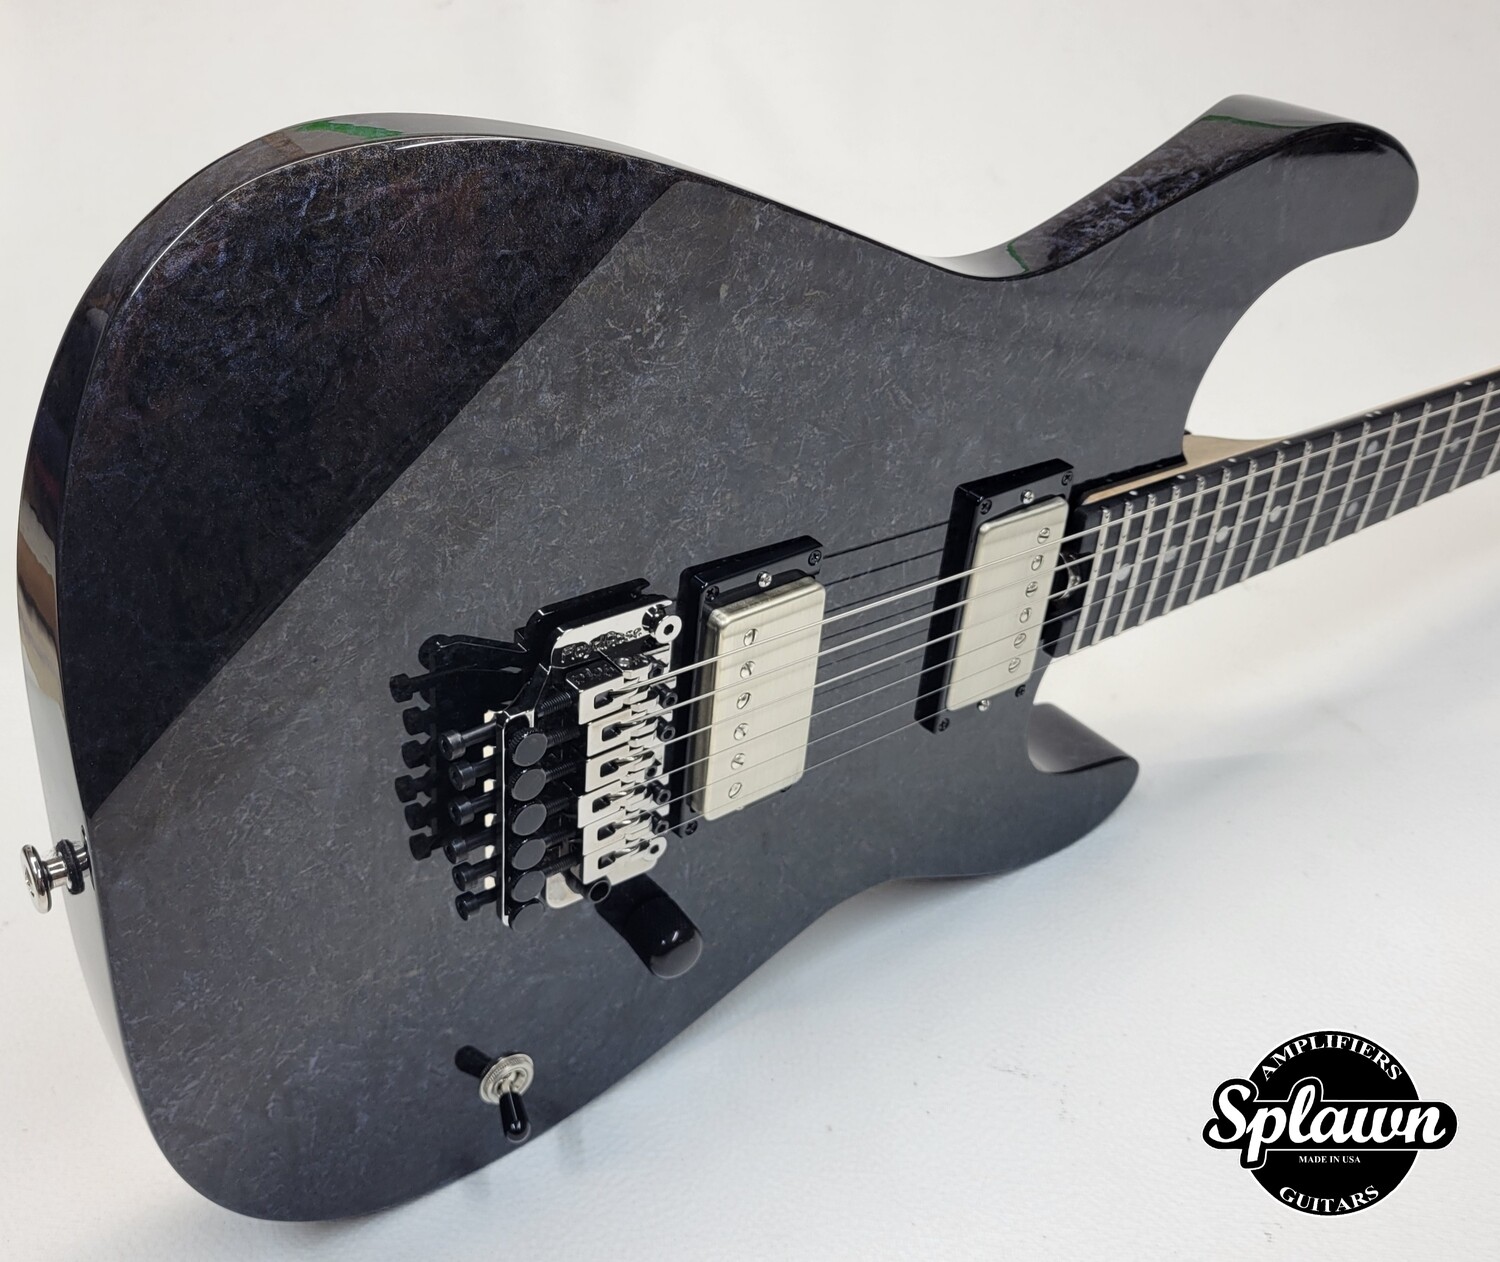 Splawn SS2 Guitar Gun Metal Black